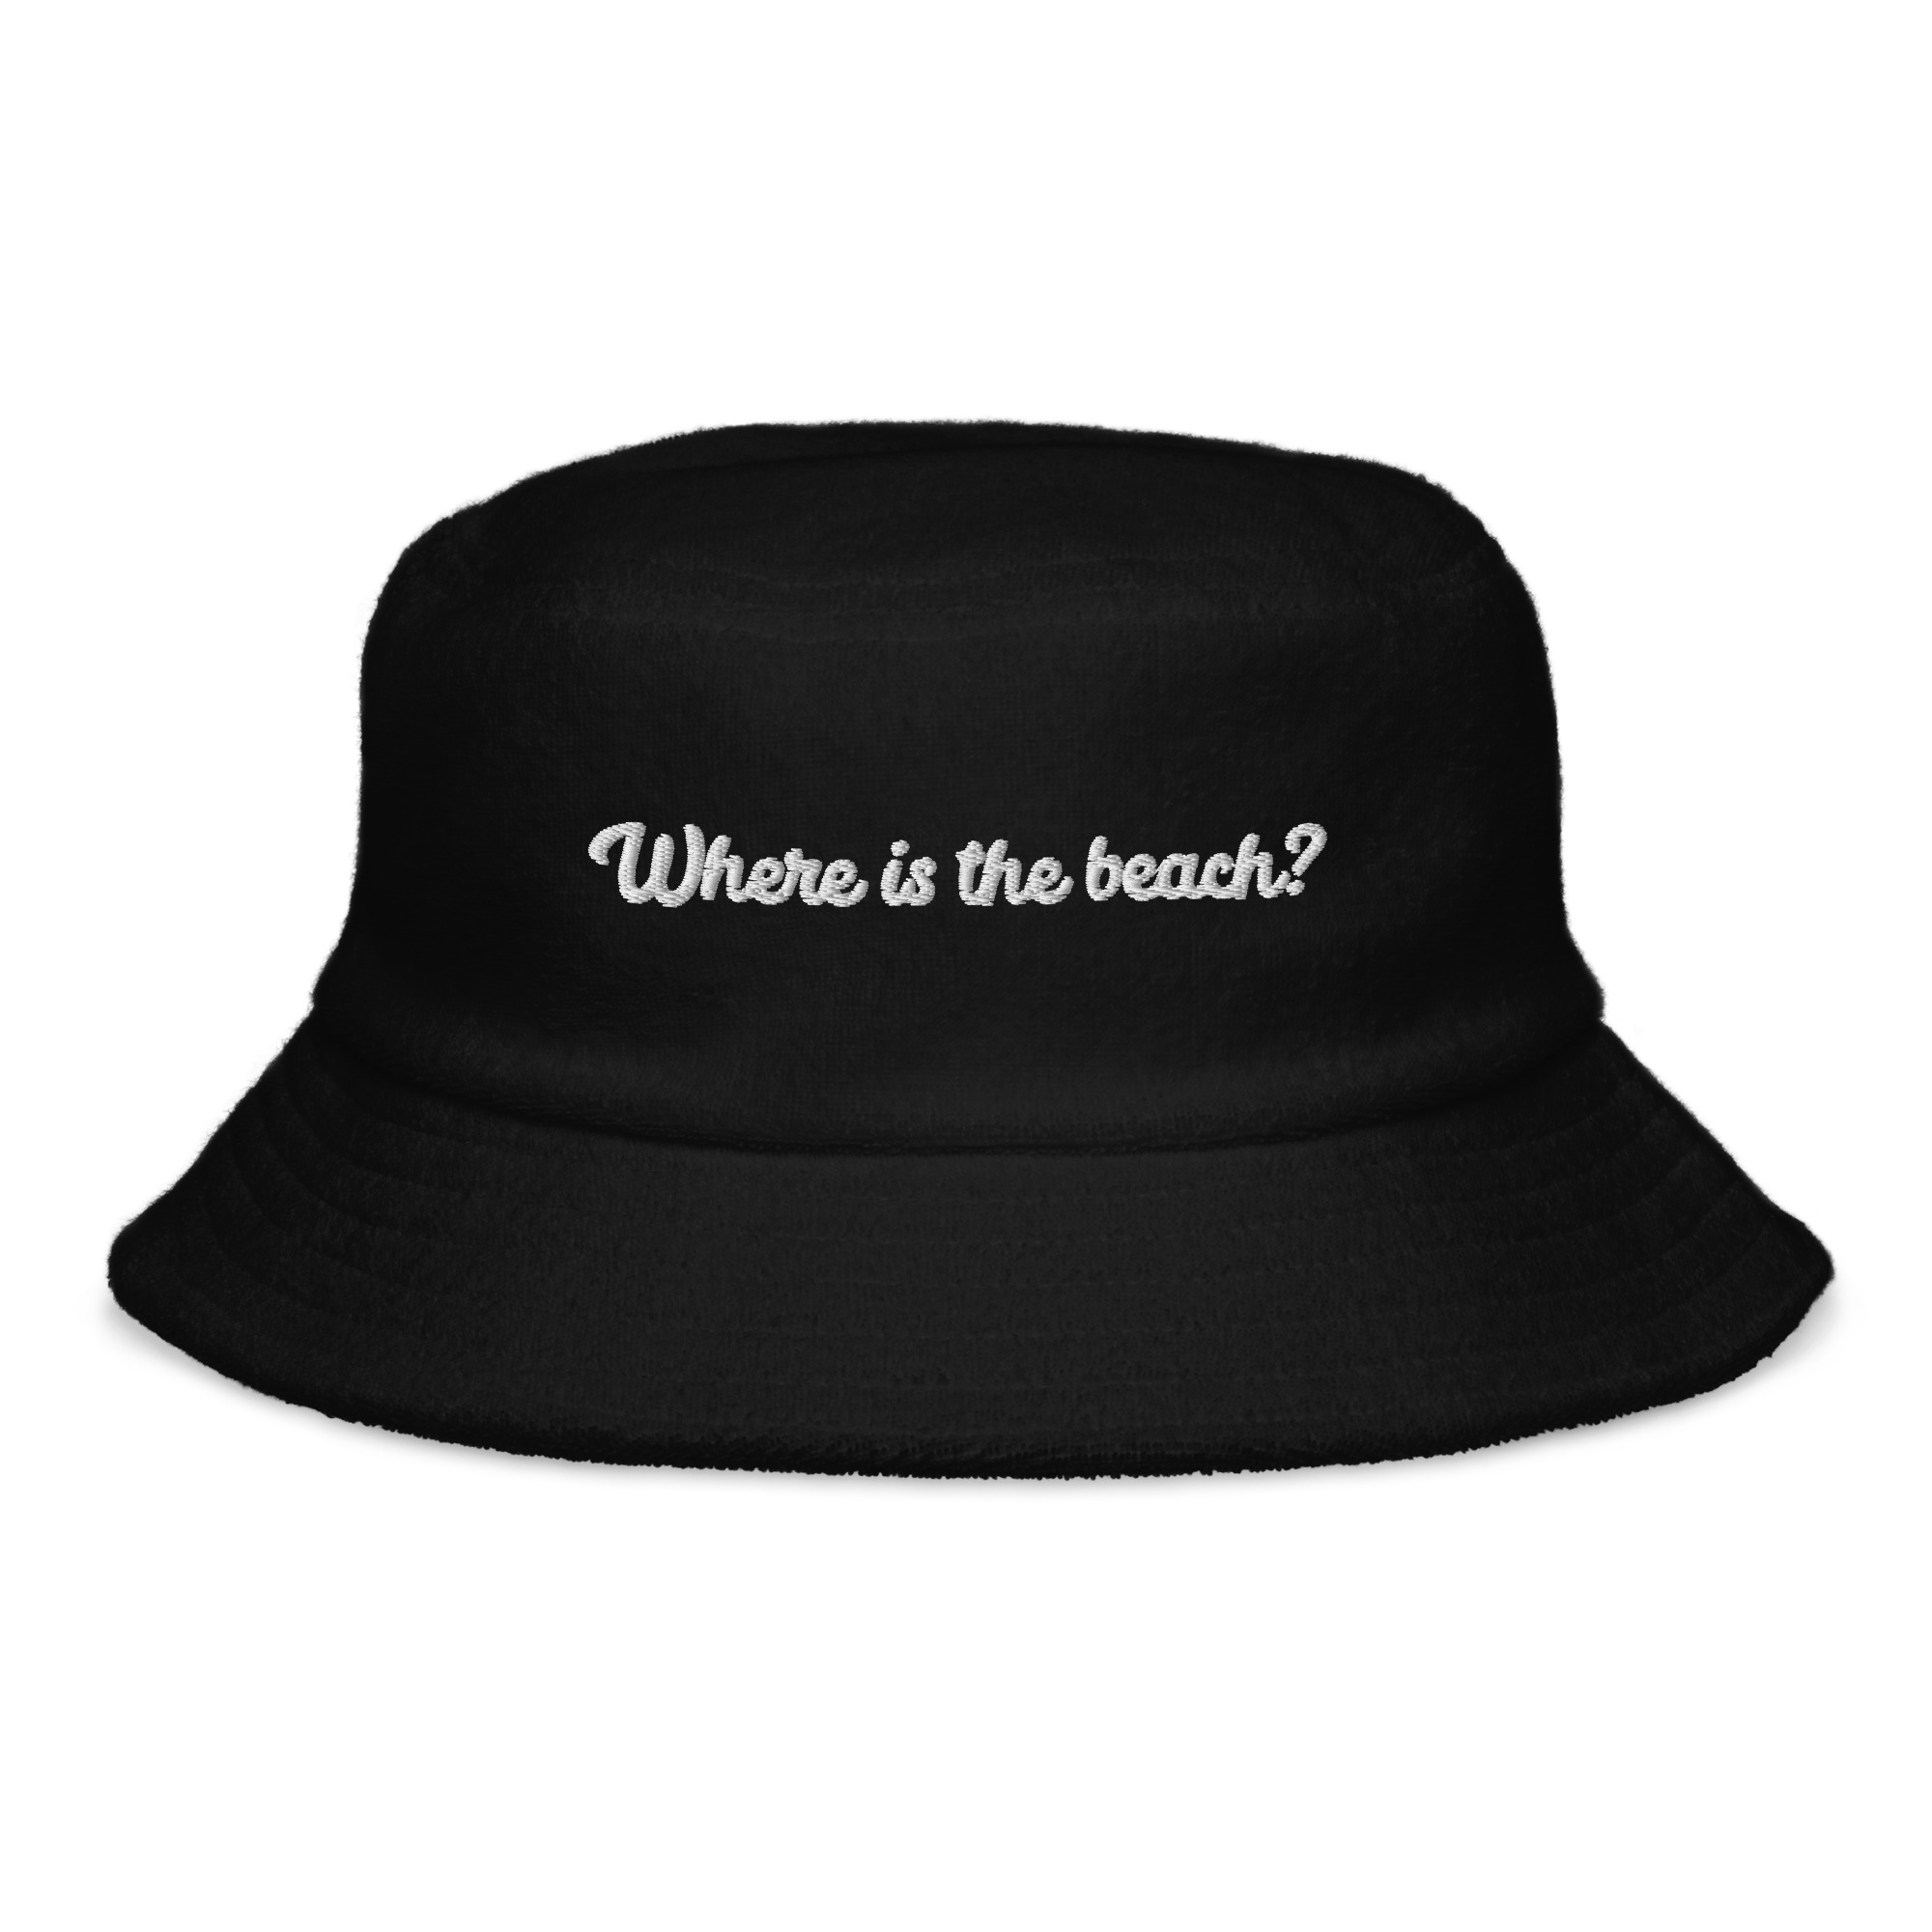 “Where is the beach?” – Fischerhut aus Frottee